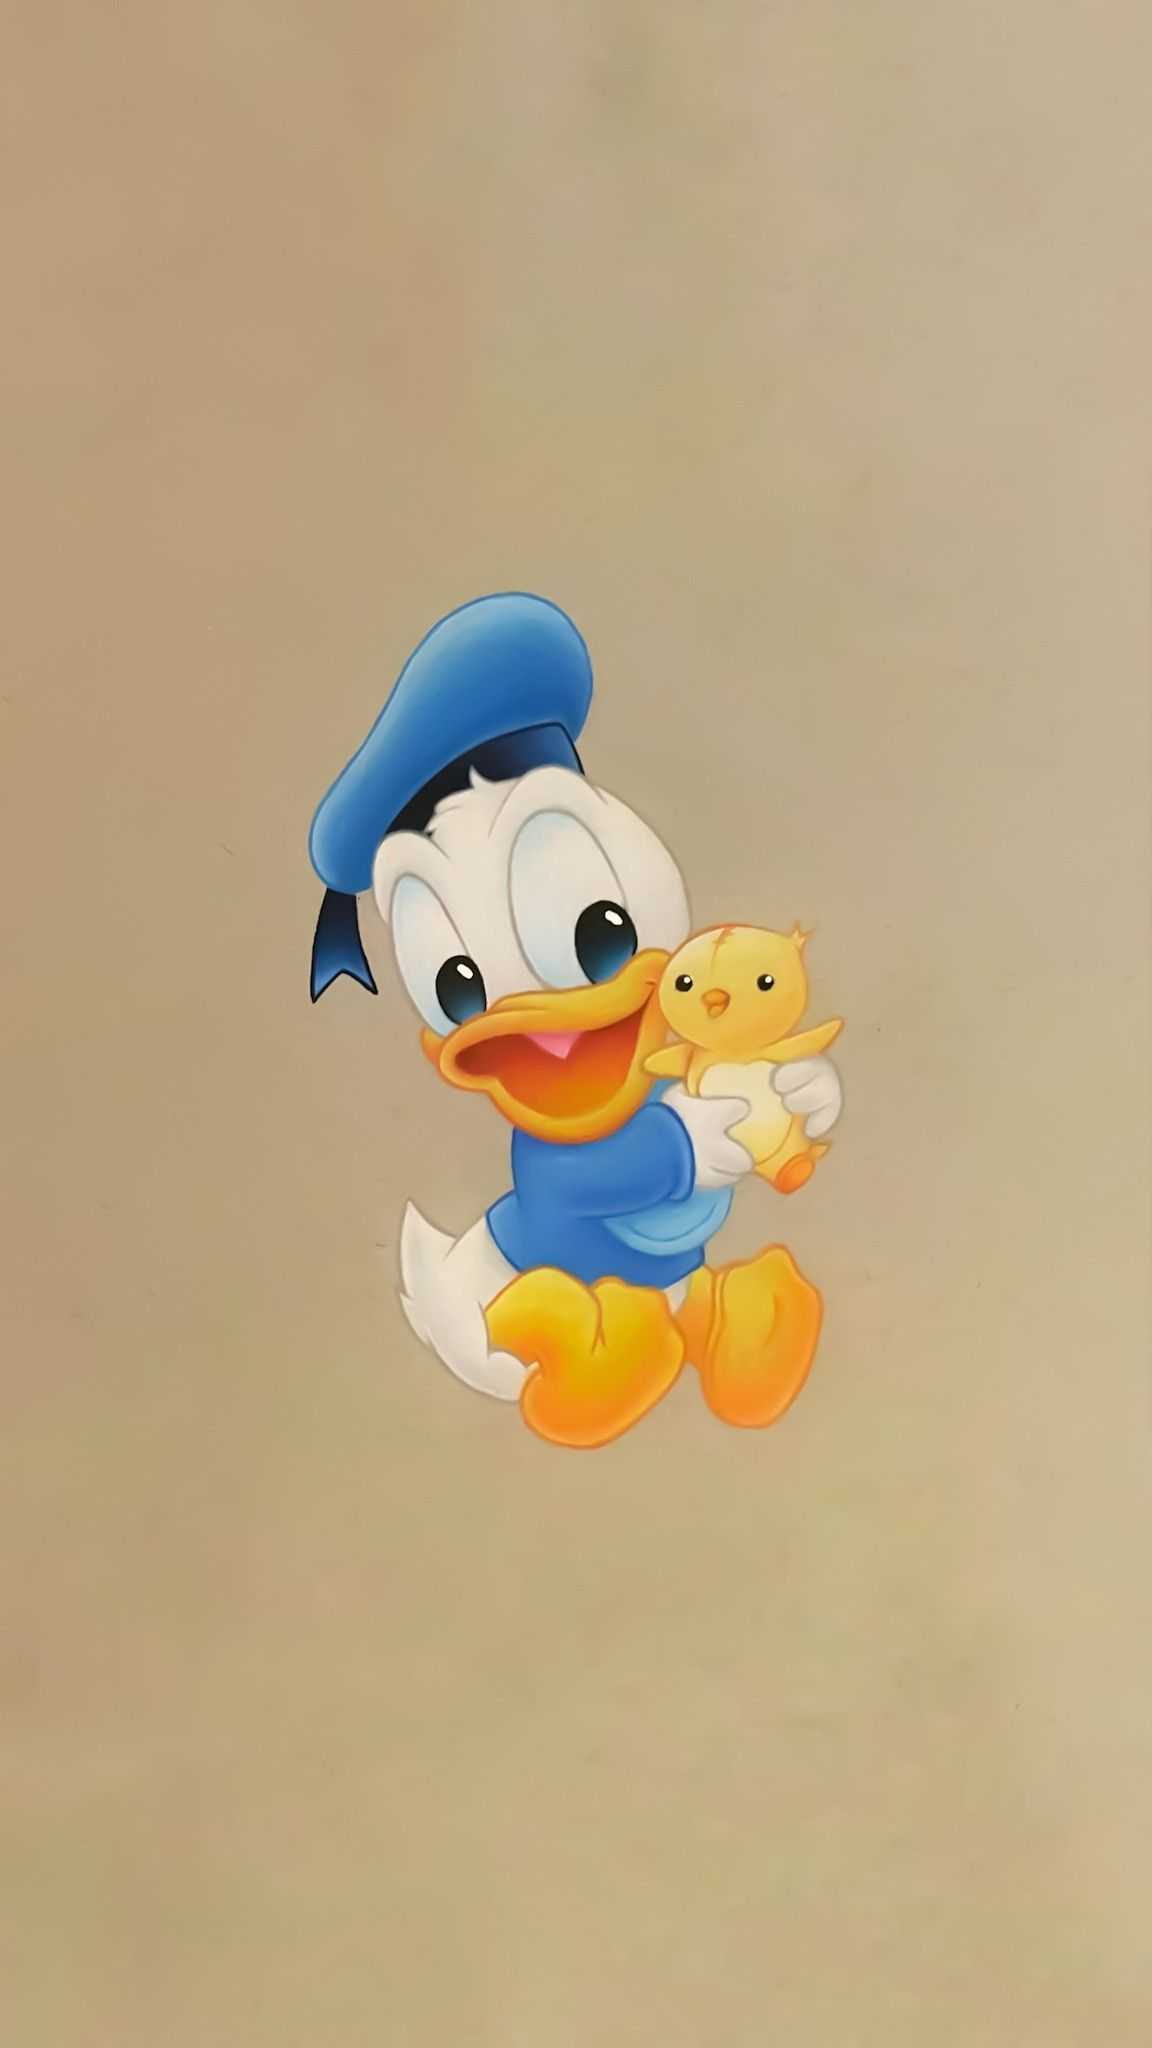 Cute Donald Duck Wallpaper Kolpaper Awesome Free Hd Wallpapers